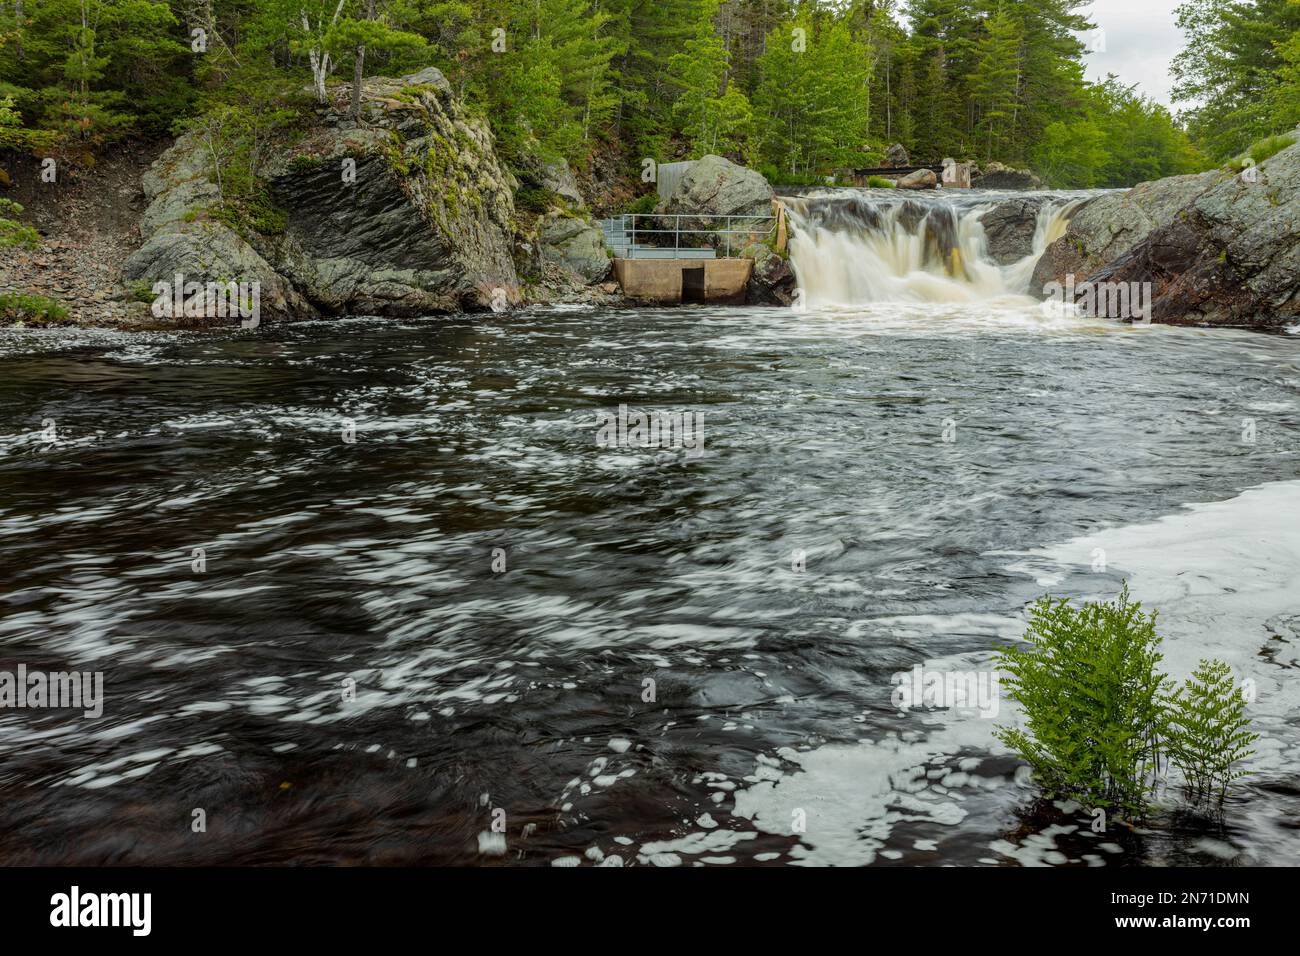 Downstream from Indian Falls in Nova Scotia, Canada. Stock Photo